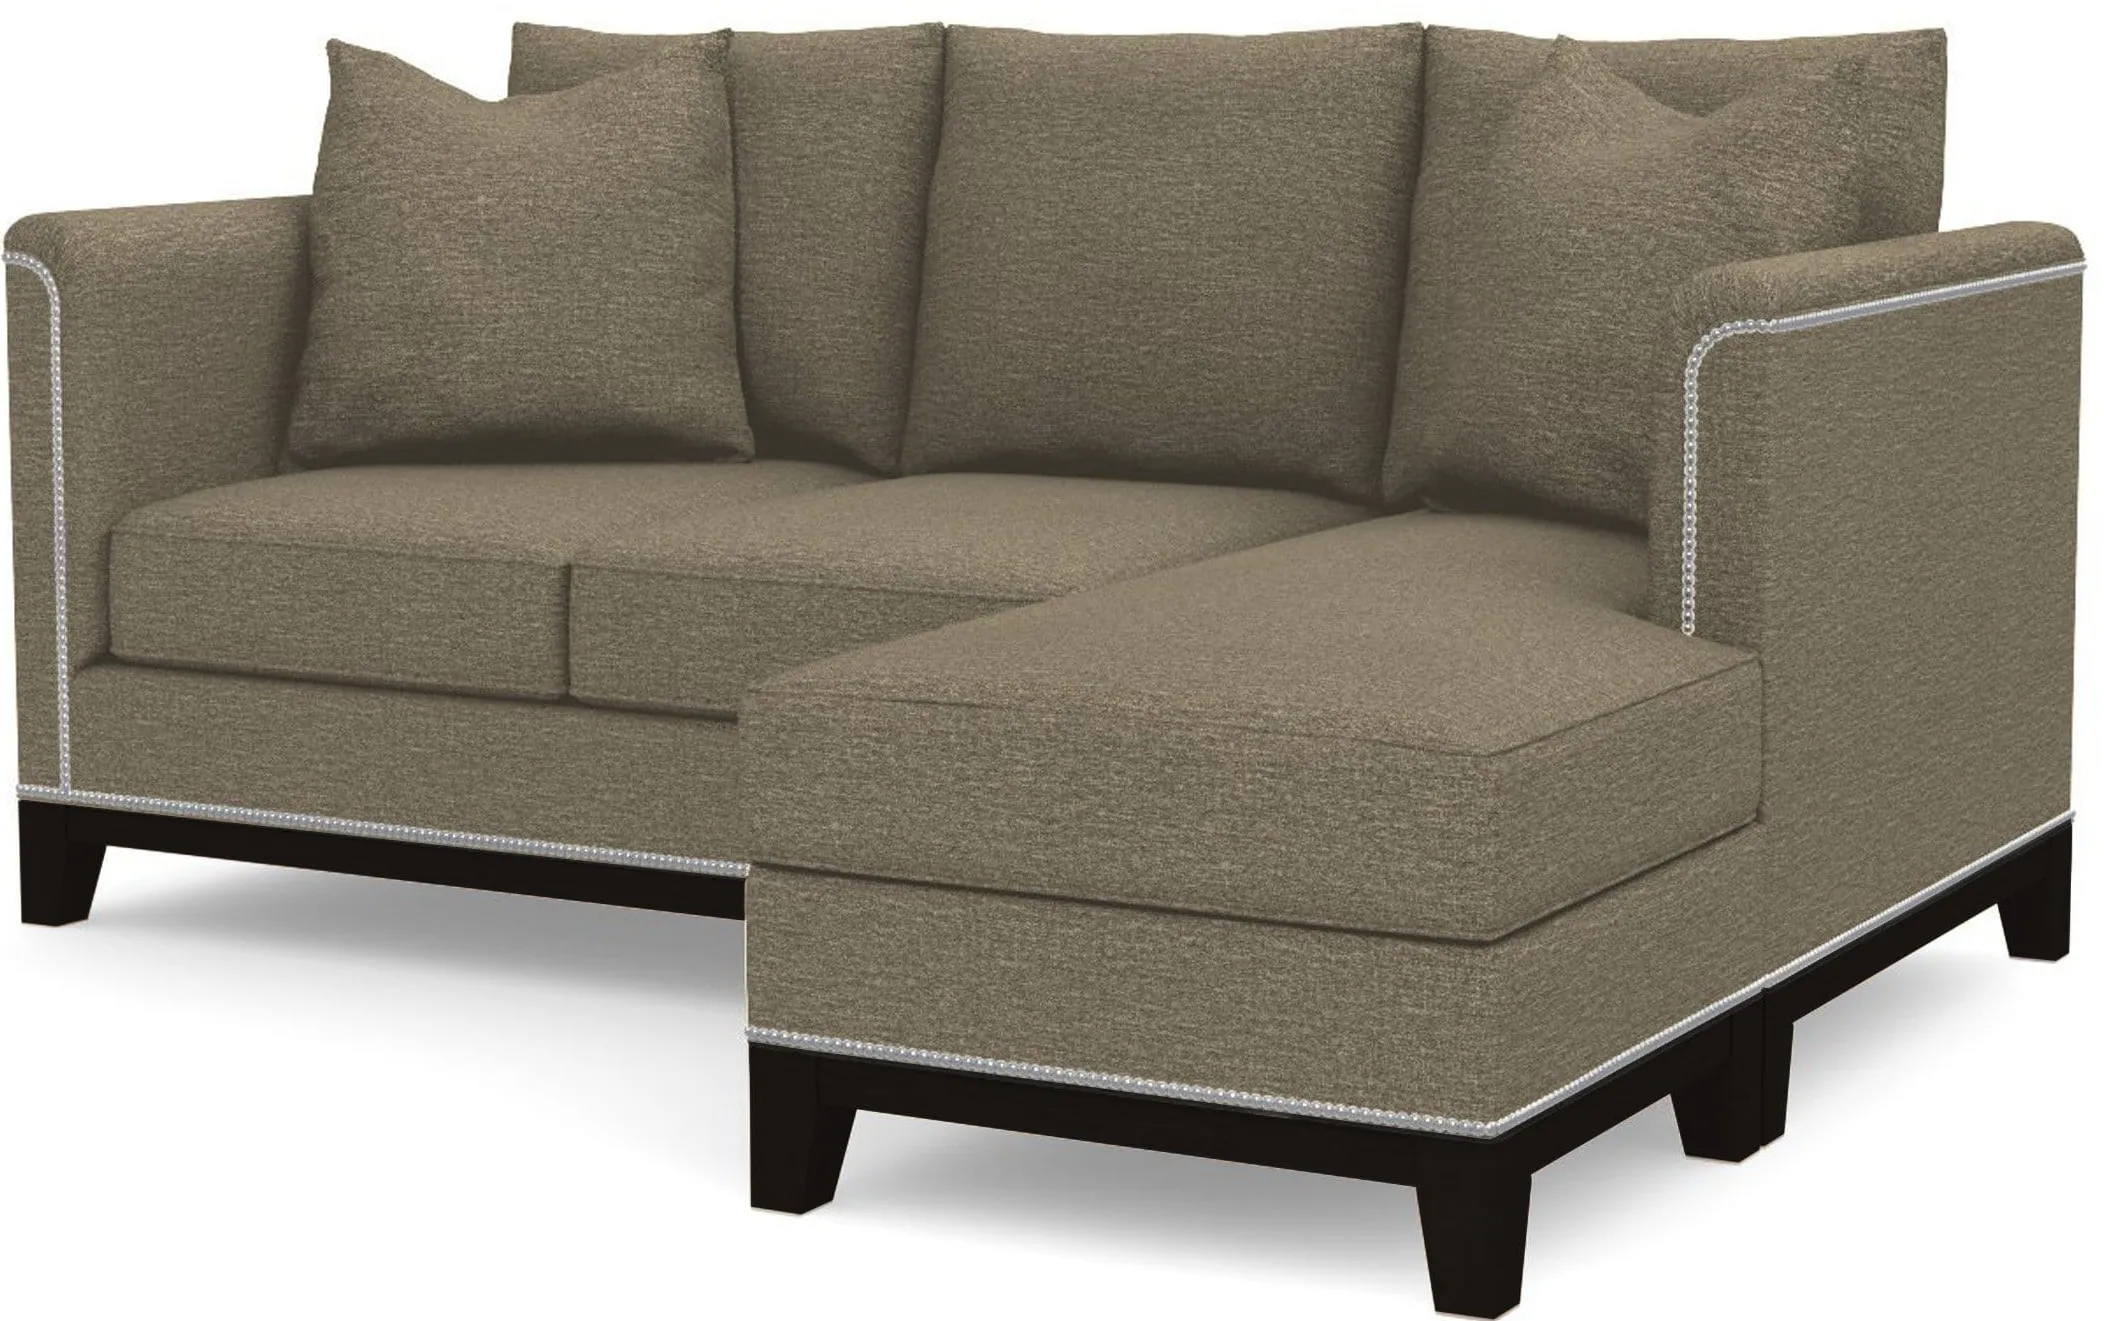 La Brea Reversible Chaise Sleeper Sofa Bed